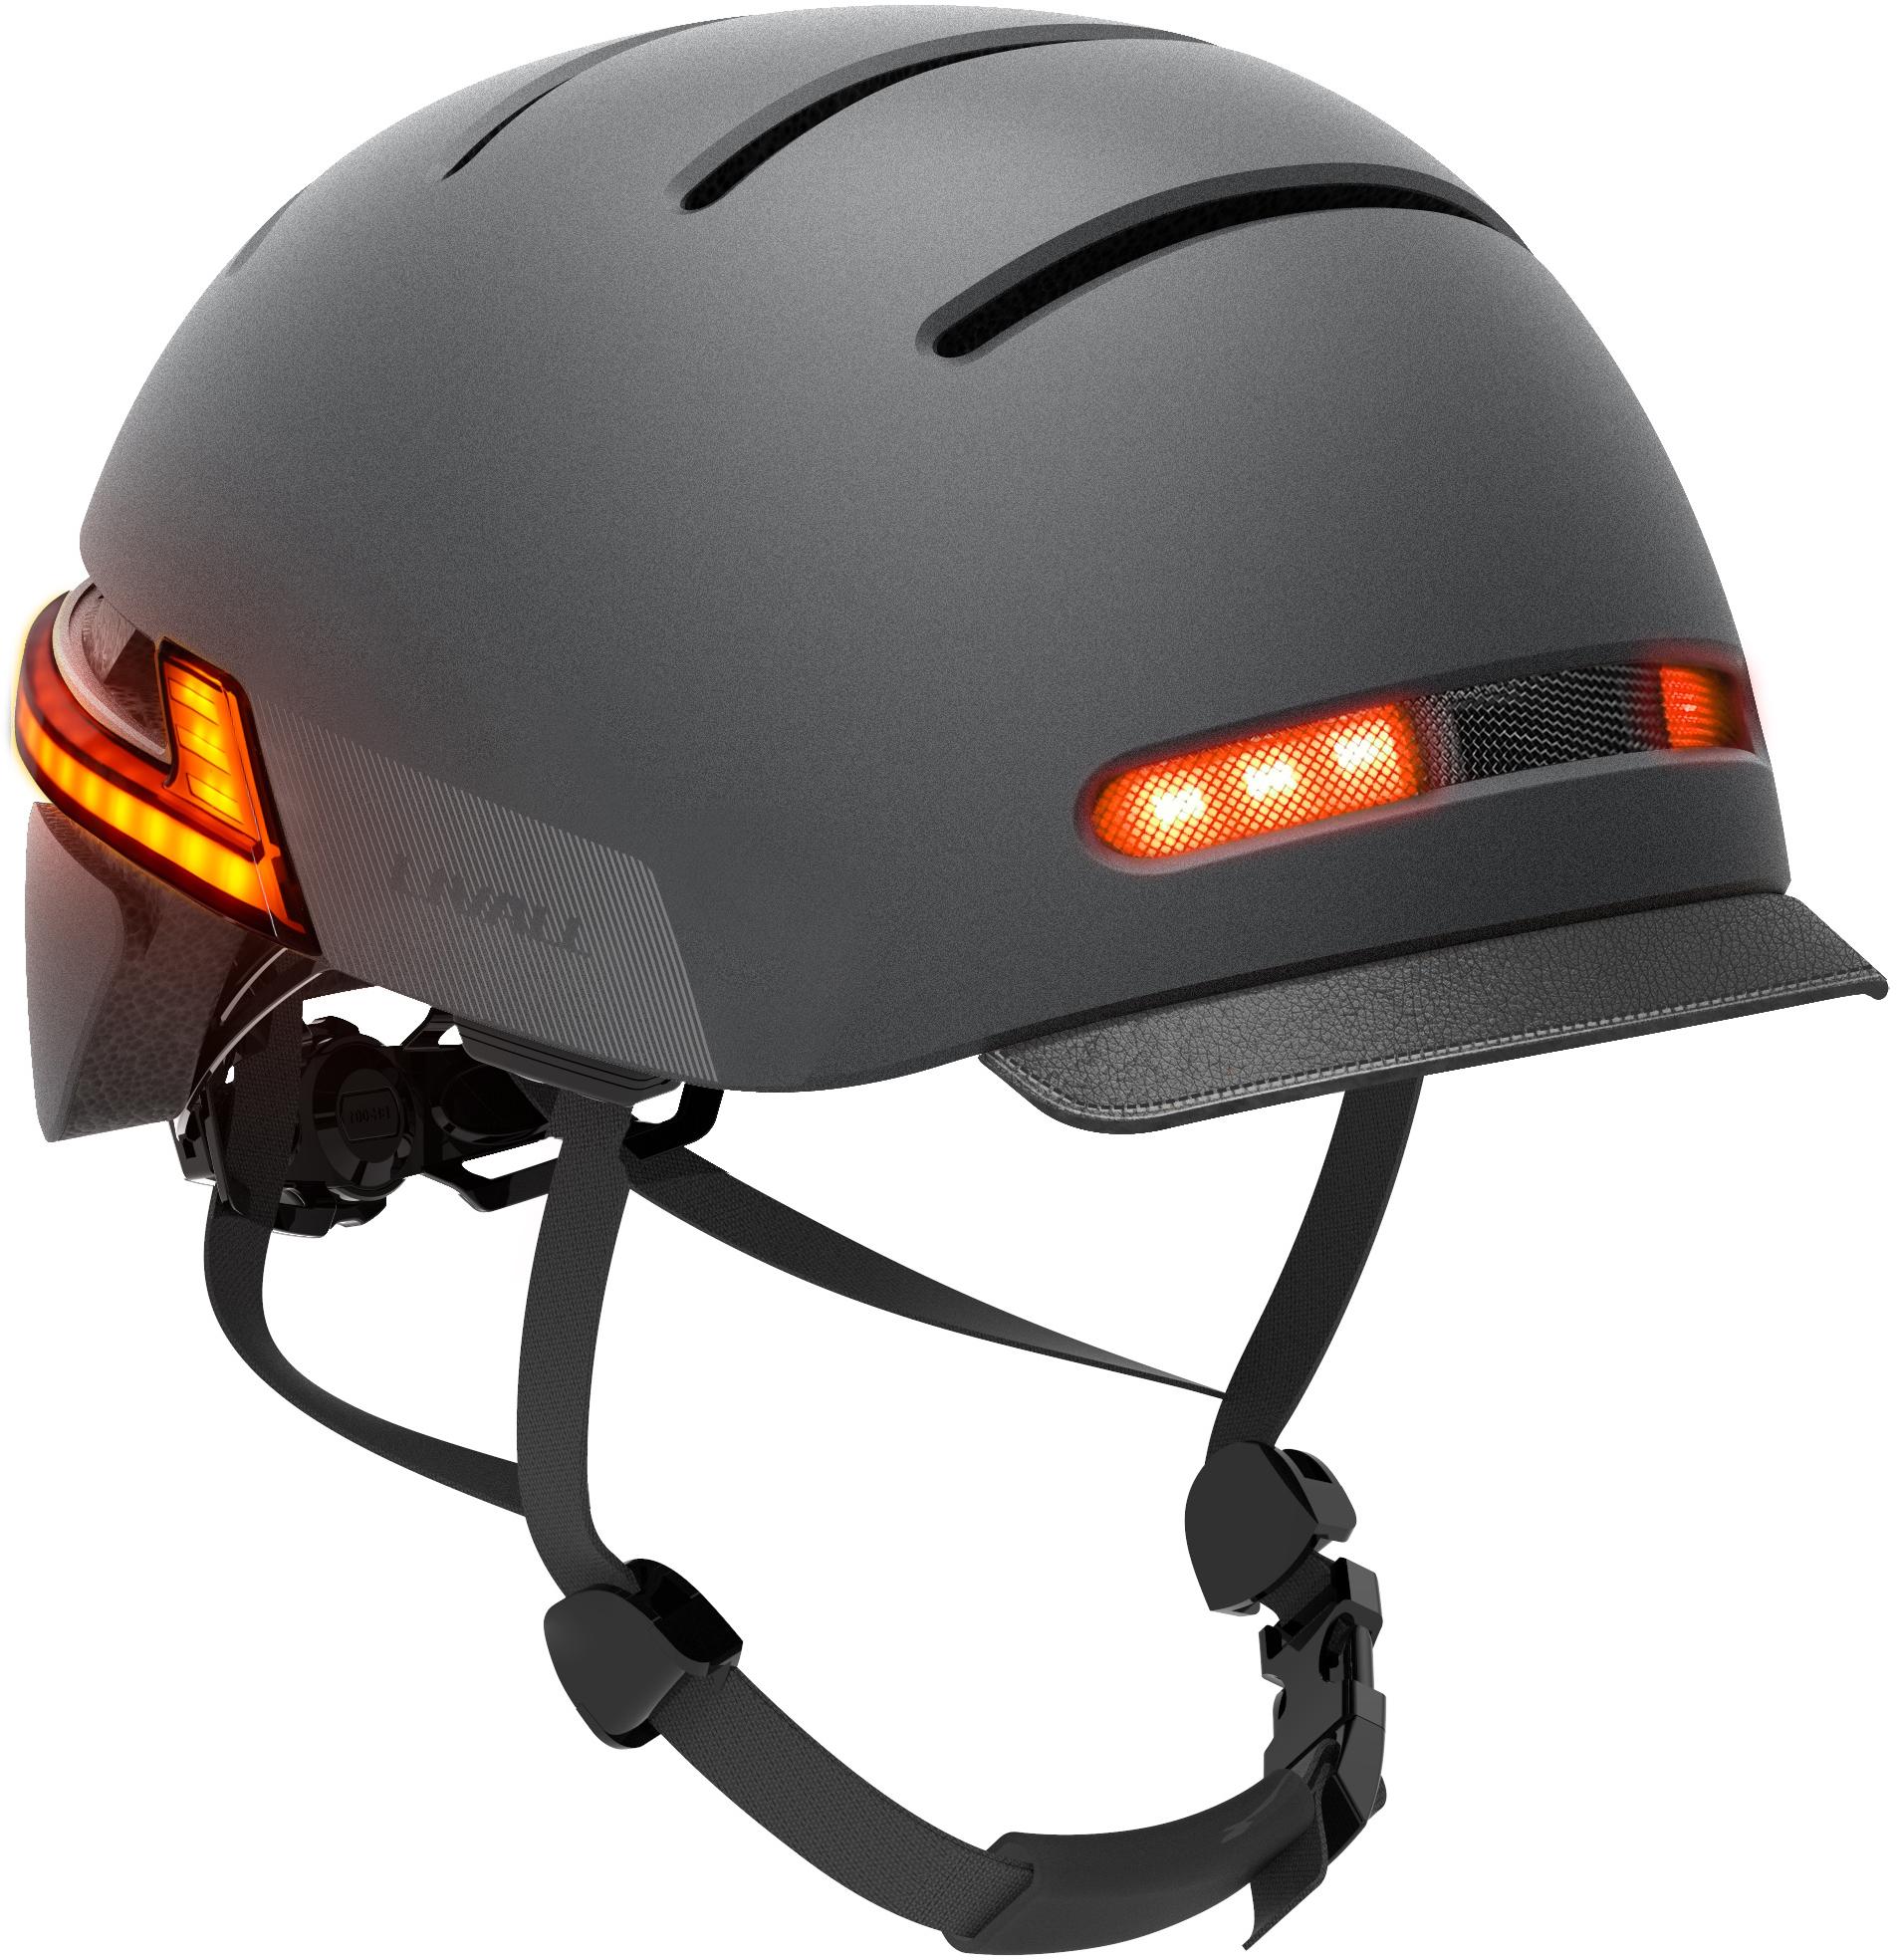 Livall Bh51M Neo Helmet - Black, 54-58Cm